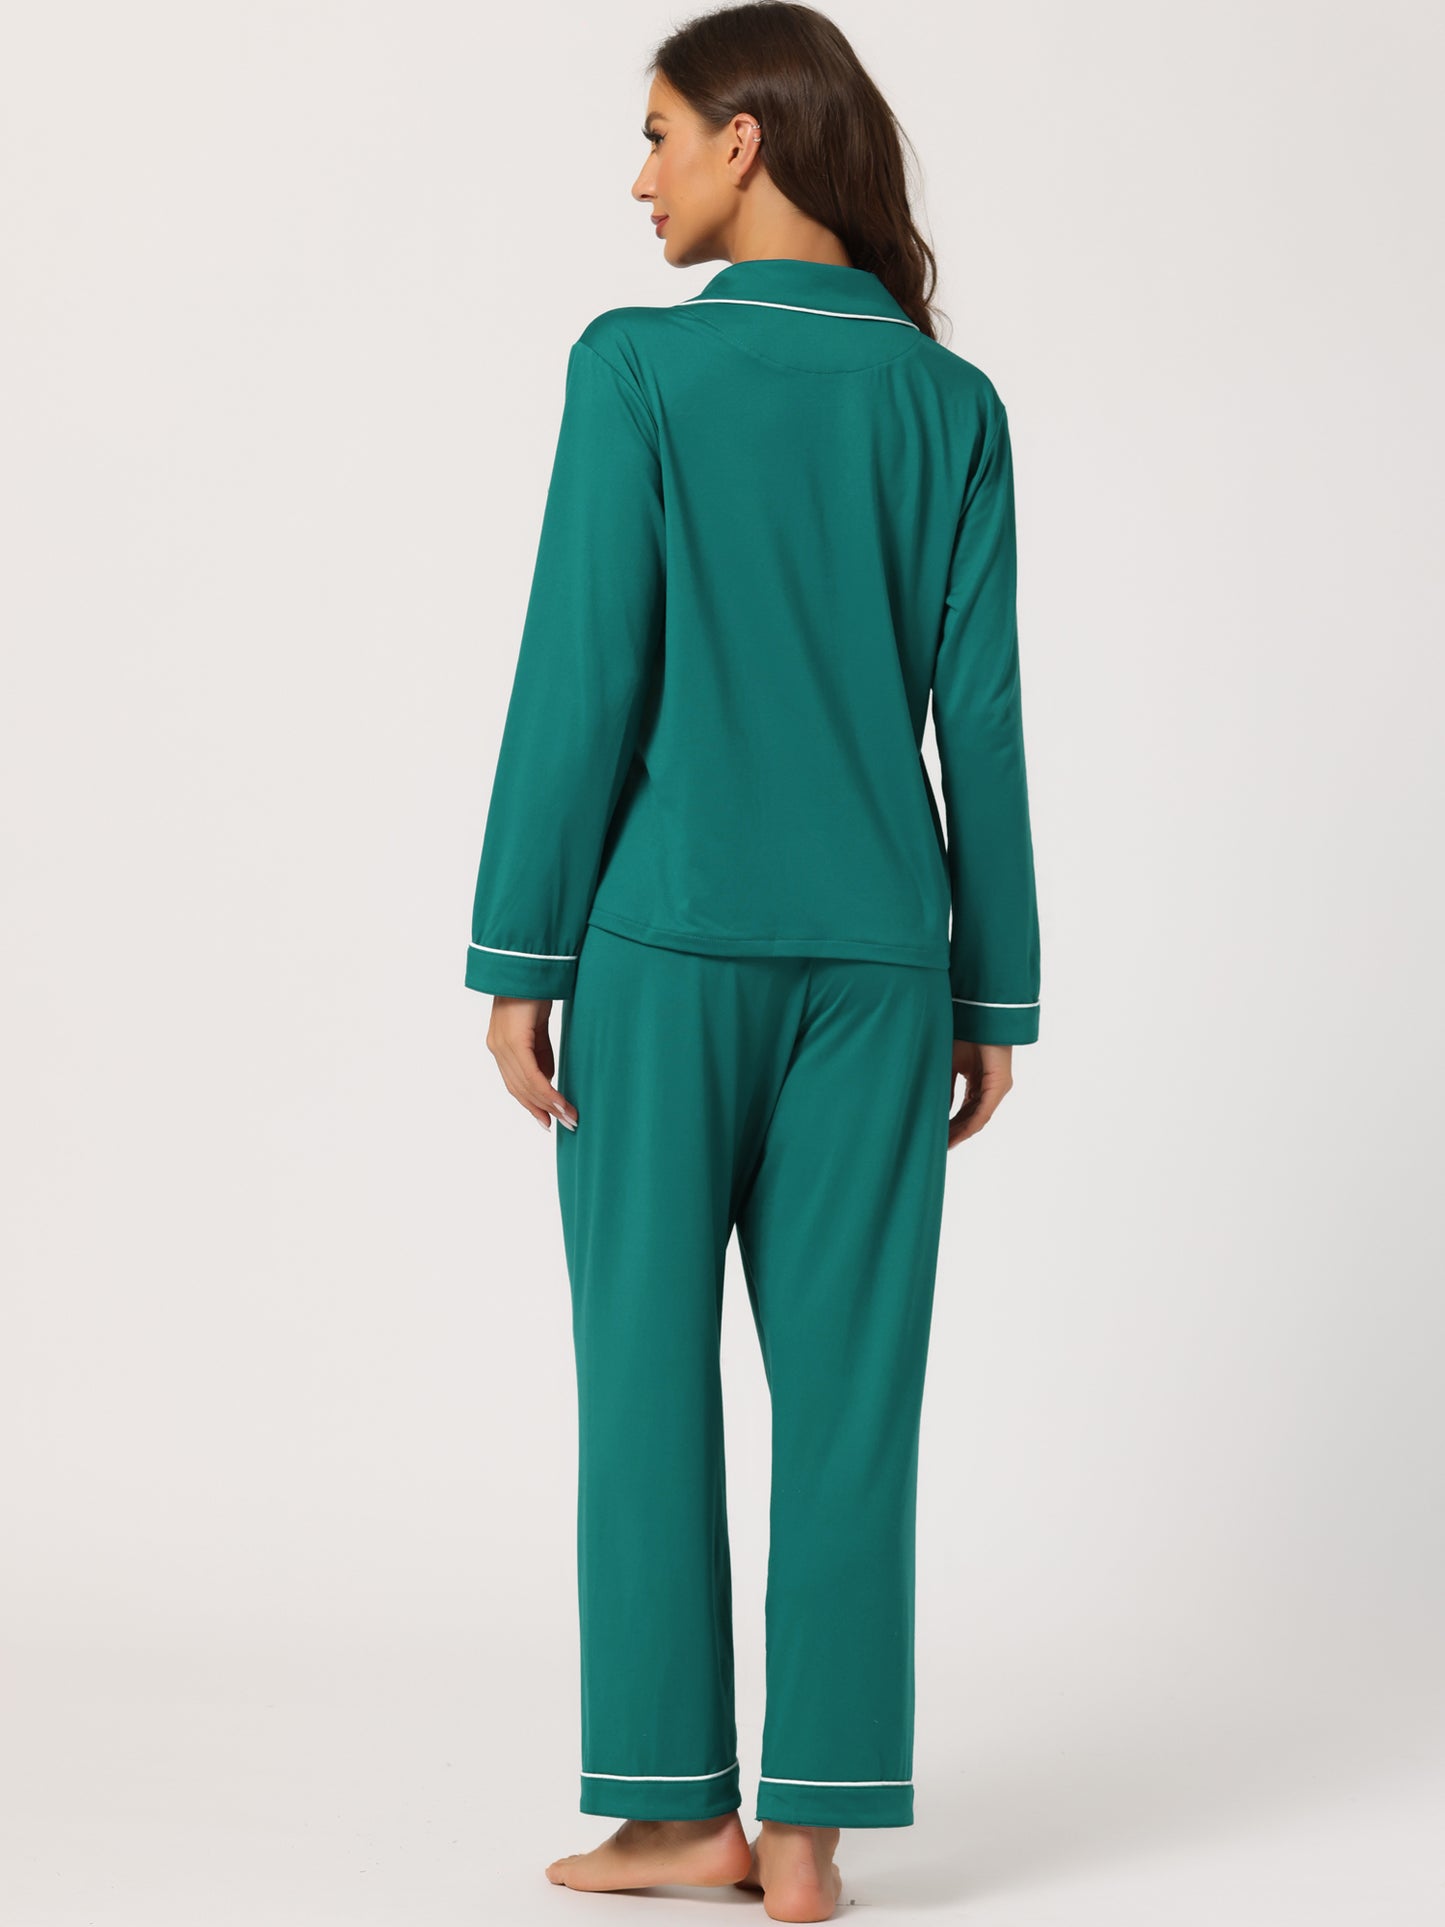 cheibear Pajama Sleep Shirt Nightwear Sleepwear Lounge Modal Pj Sets Peacoke Green